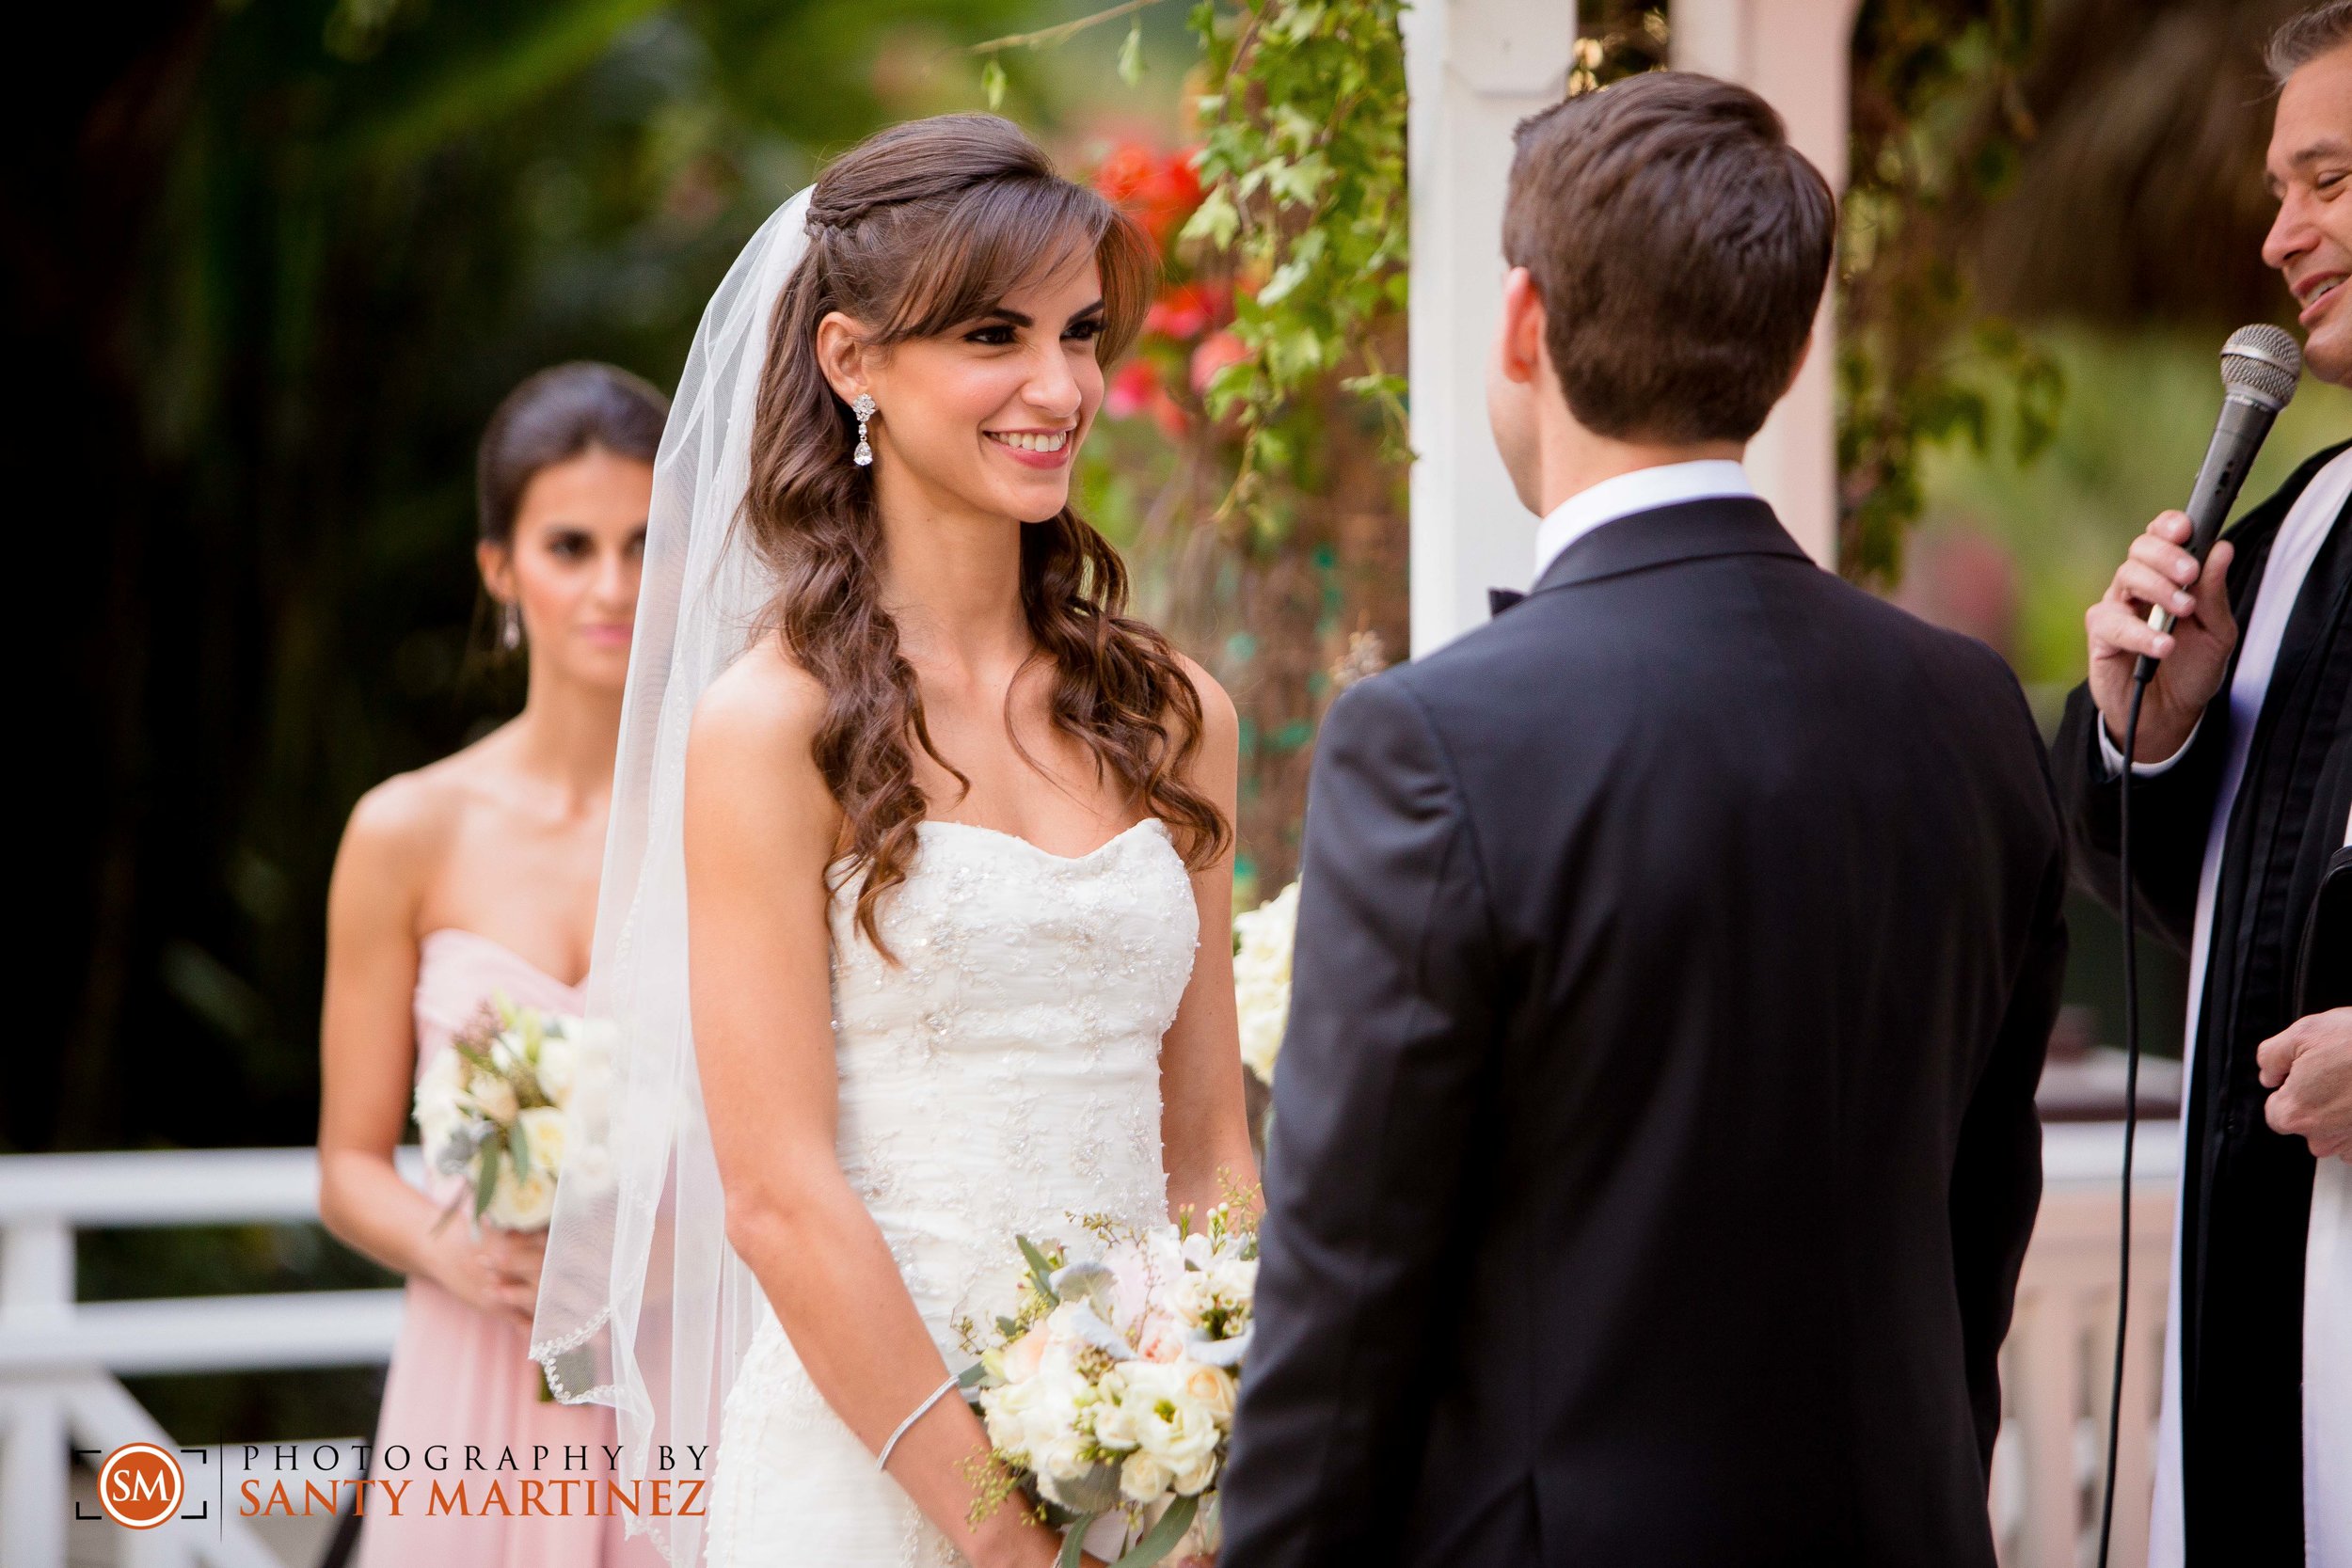 Miami Wedding Photographer - Santy Martinez -25.jpg